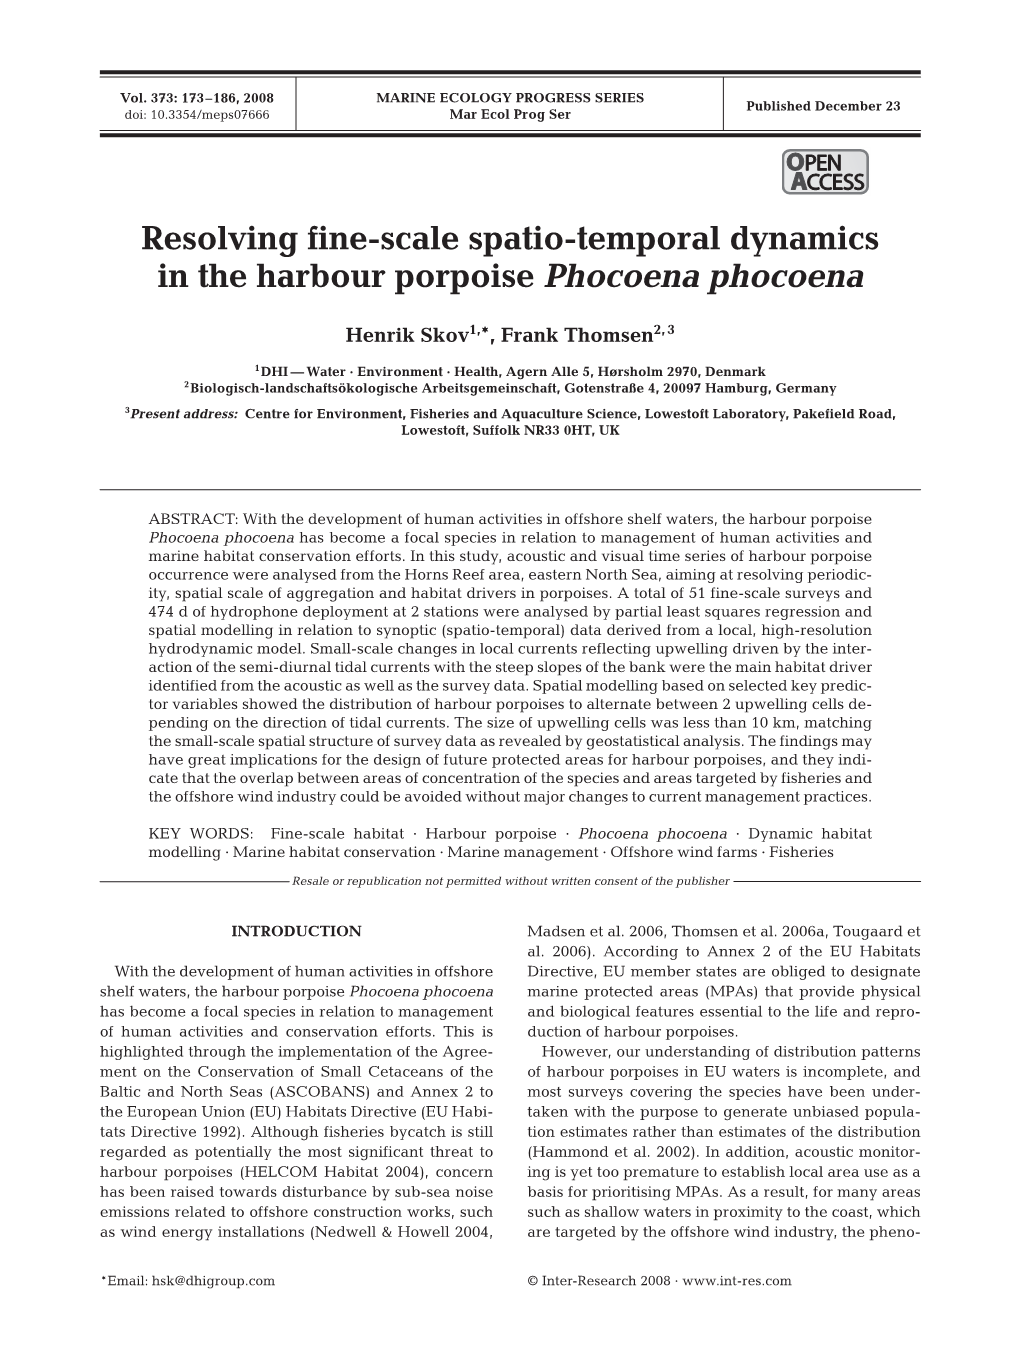 Resolving Fine-Scale Spatio-Temporal Dynamics in the Harbour Porpoise Phocoena Phocoena